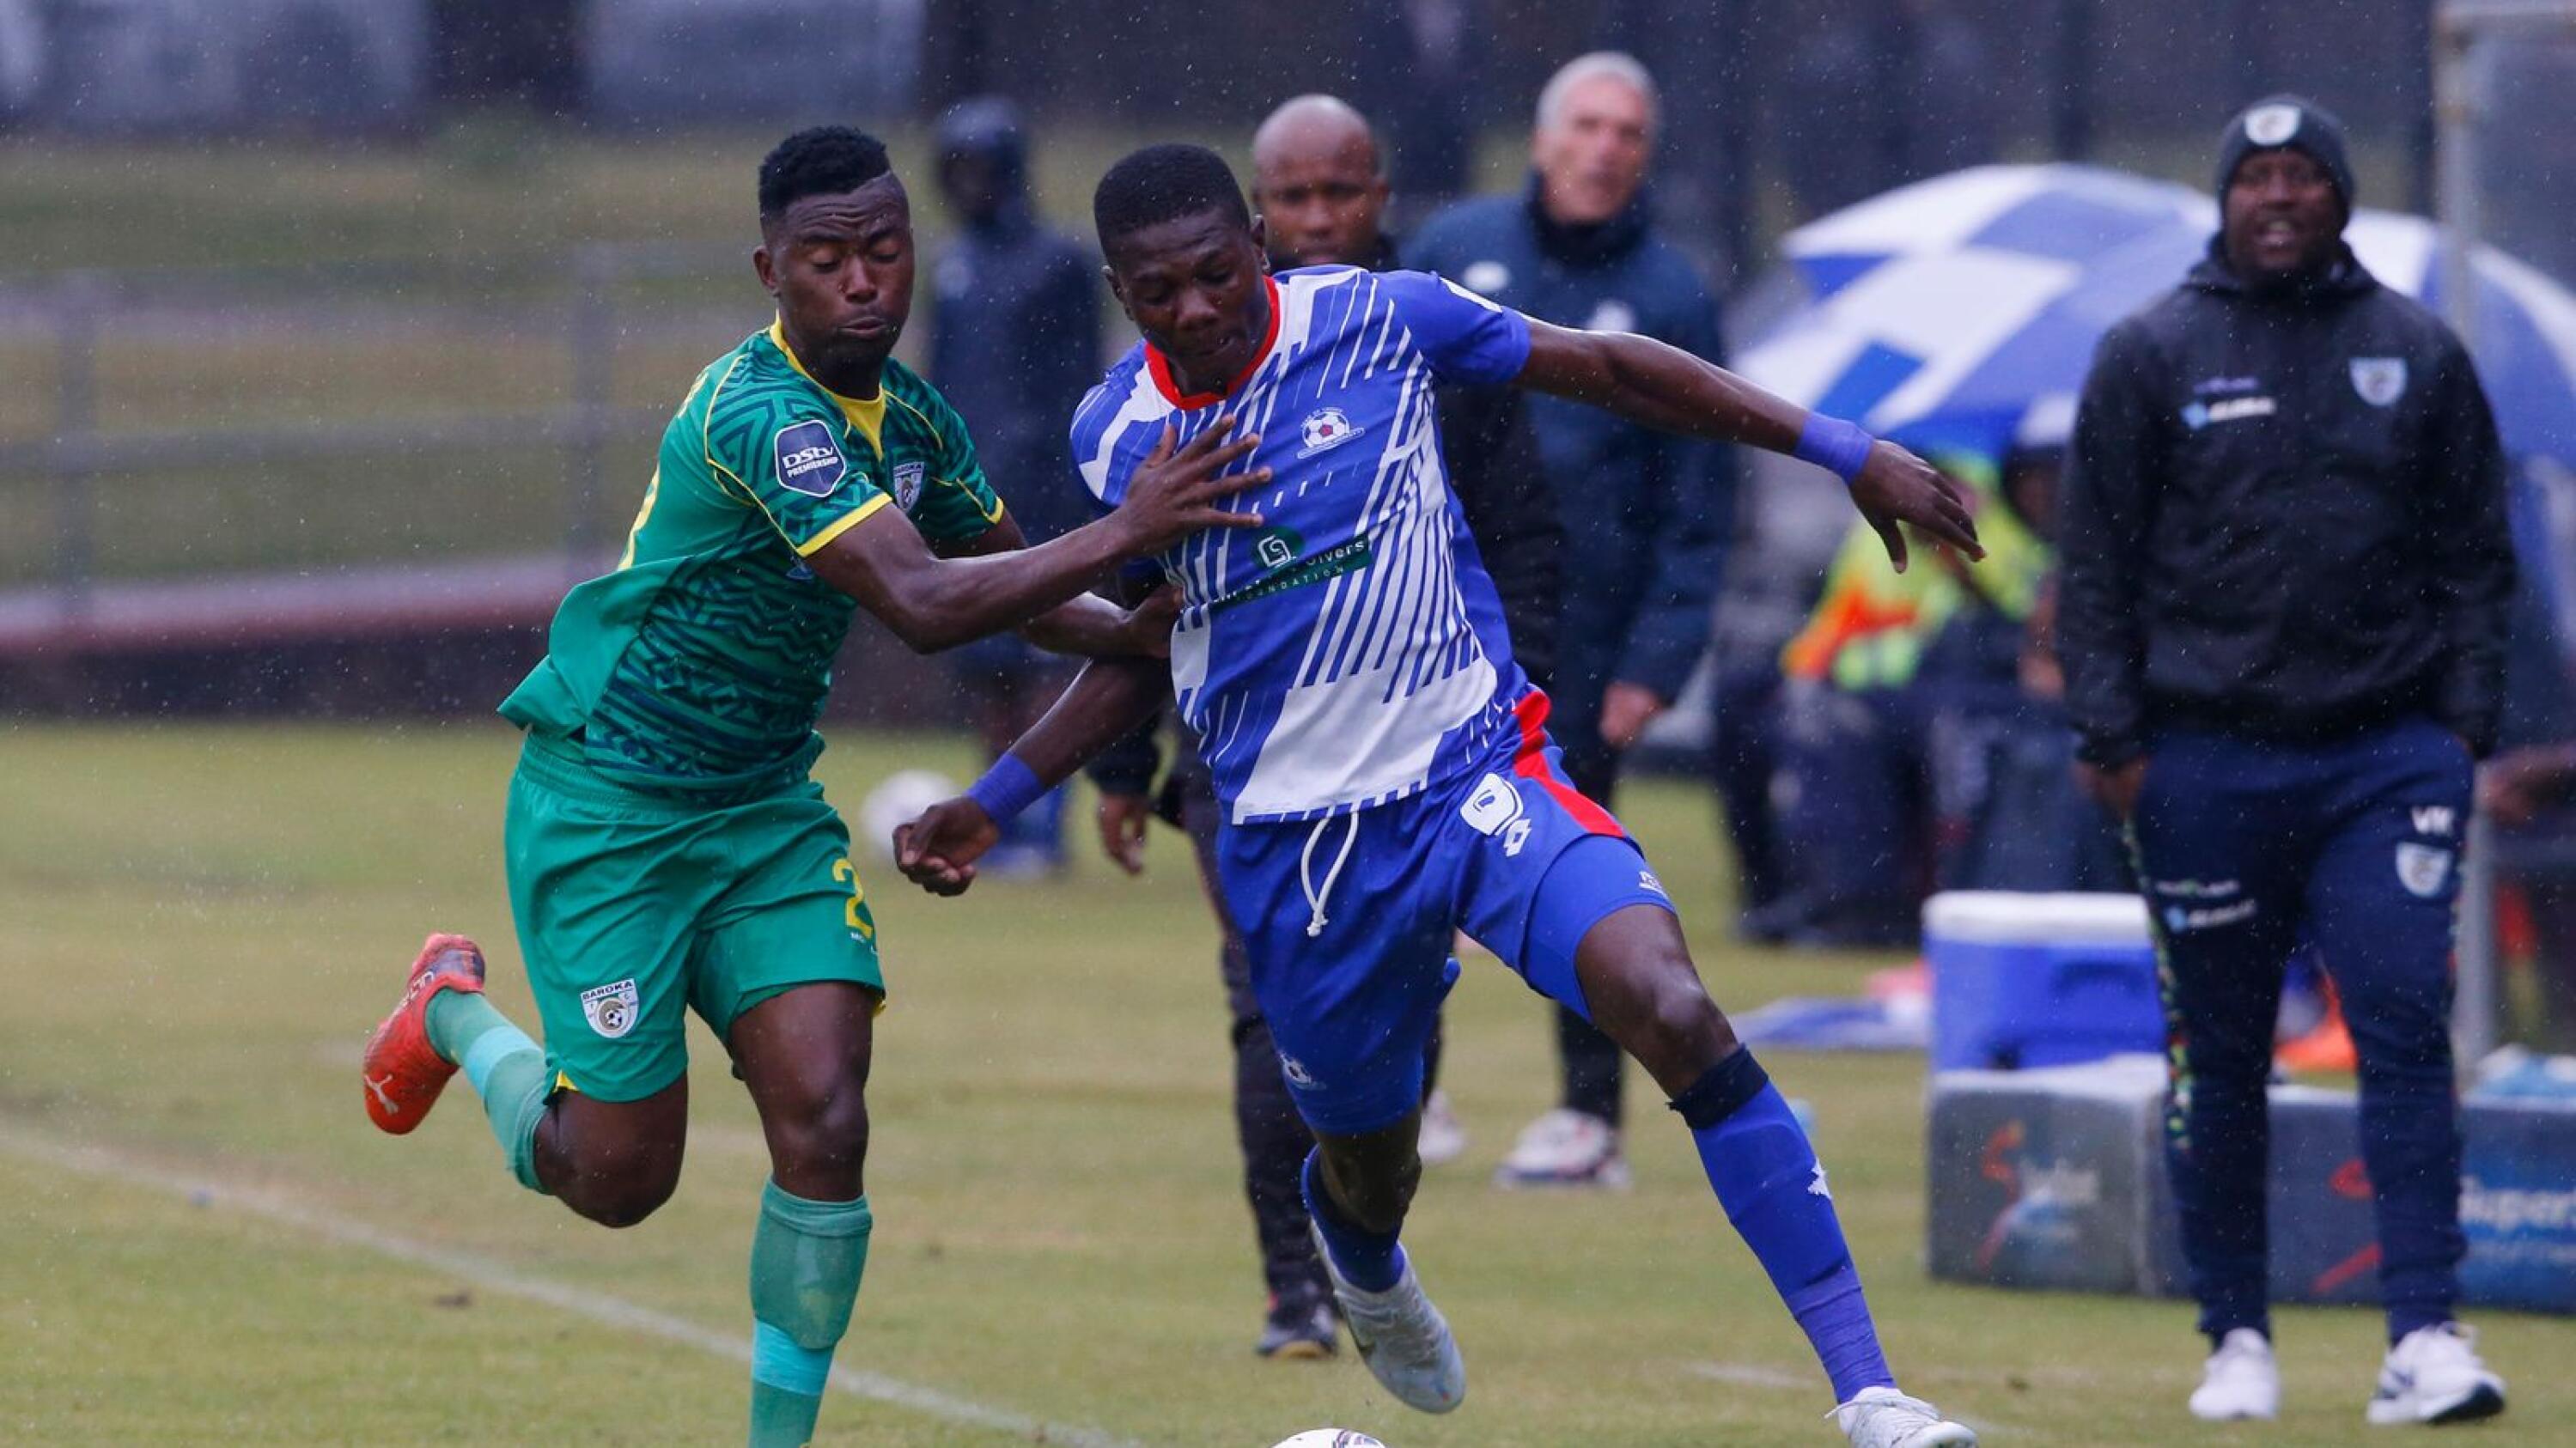 Kgodiso Monama of Baroka FC and Maritzburg United’s Tawande Macheke fight for the ball during their DStv Premiership match at Harry Gwala Stadium in Pietermaritzburg on Saturday